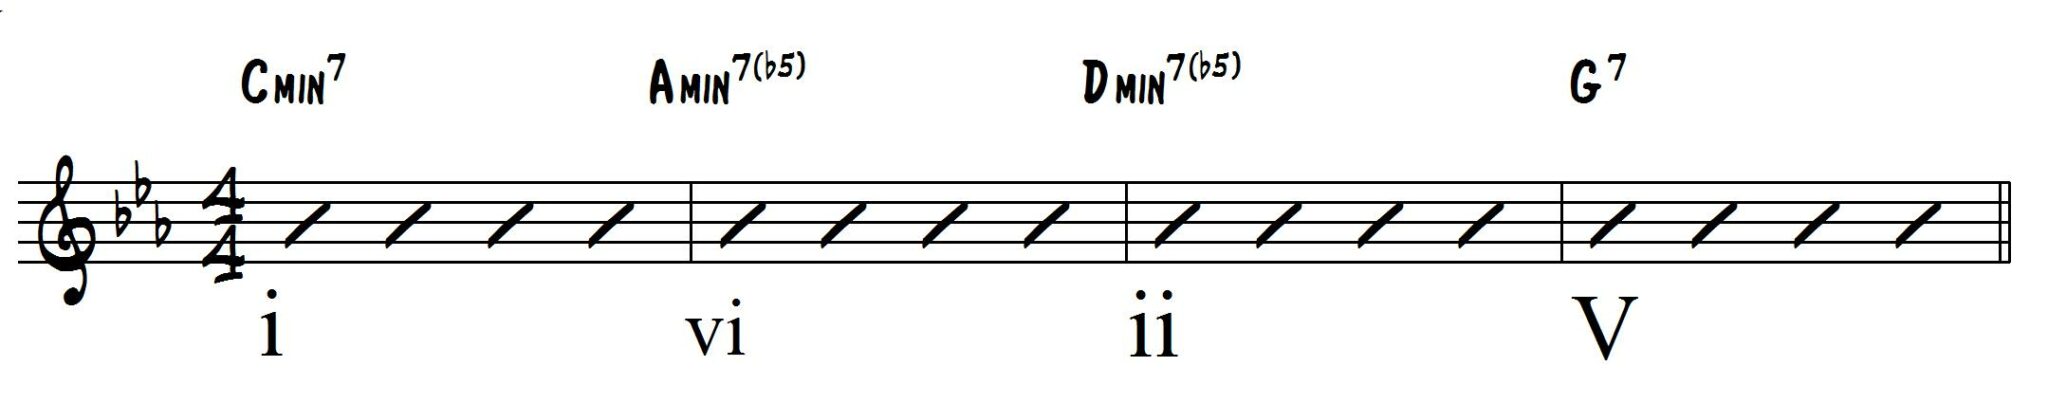 Minor i-vi-ii-V Jazz Chord Progression